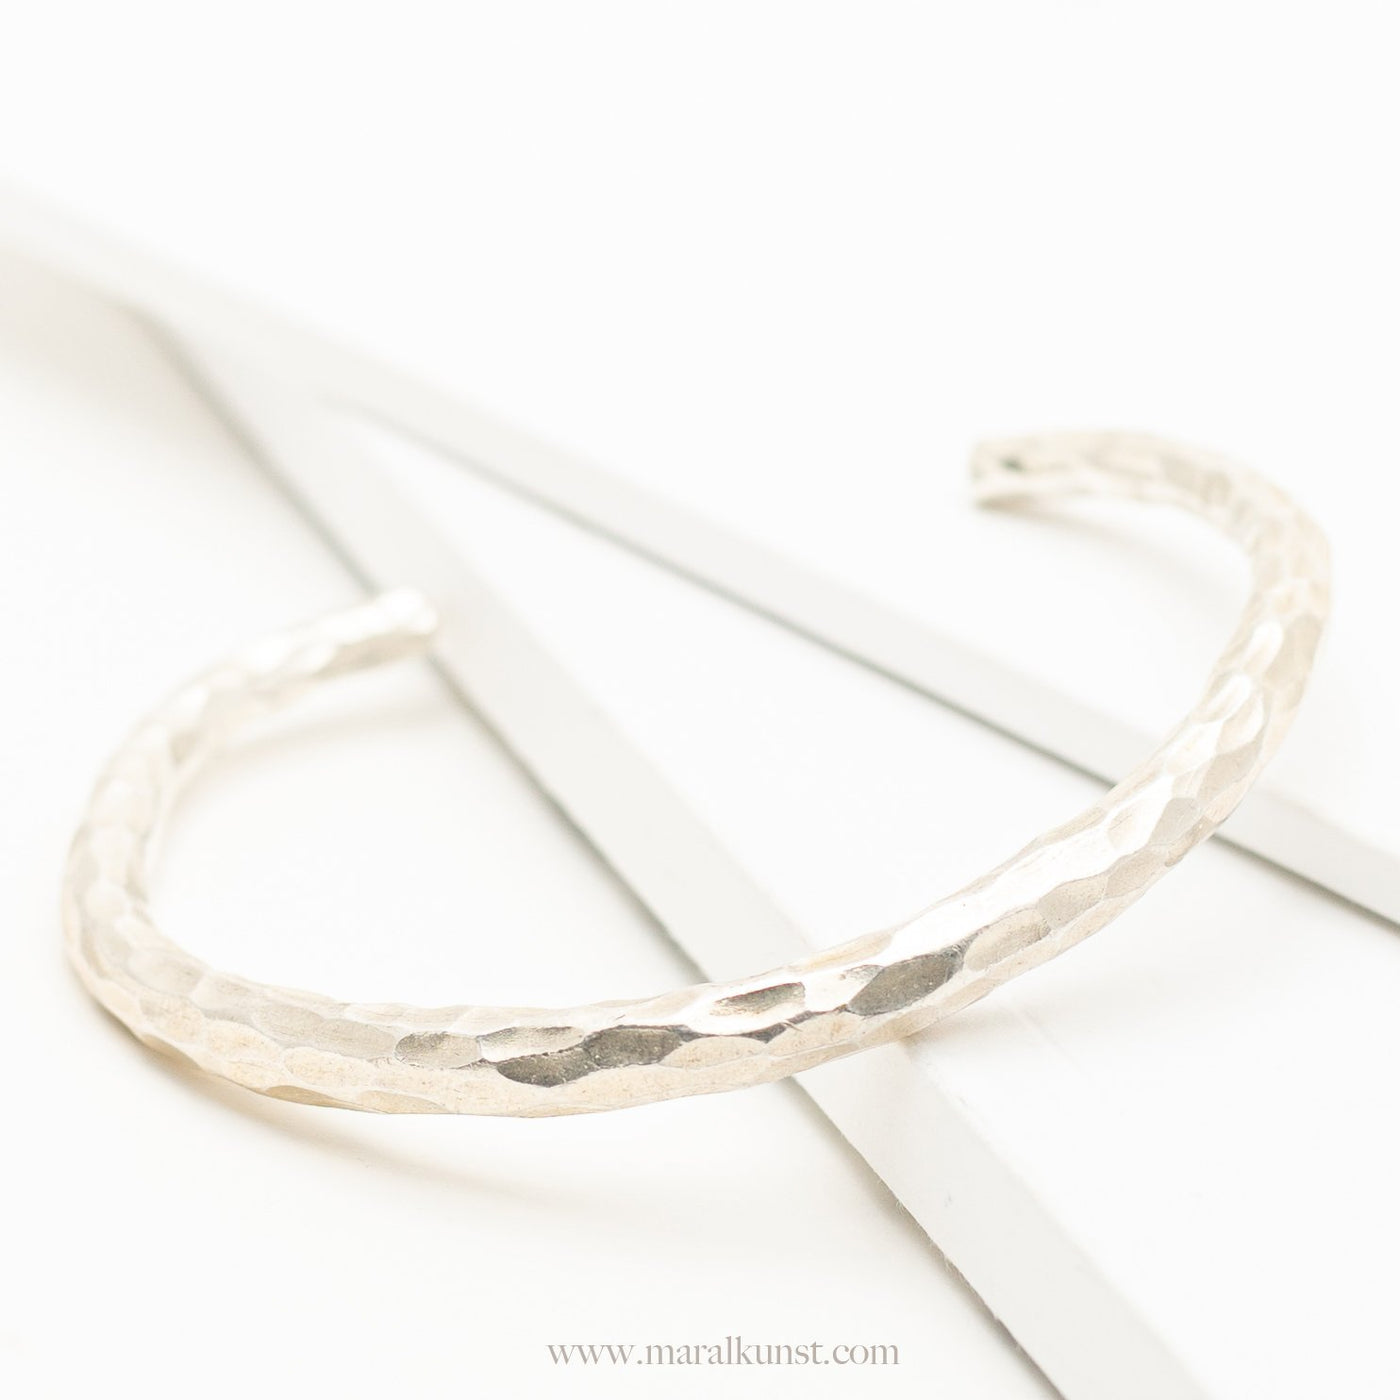 Statement Silver Cuff Bracelet - Maral Kunst Jewelry